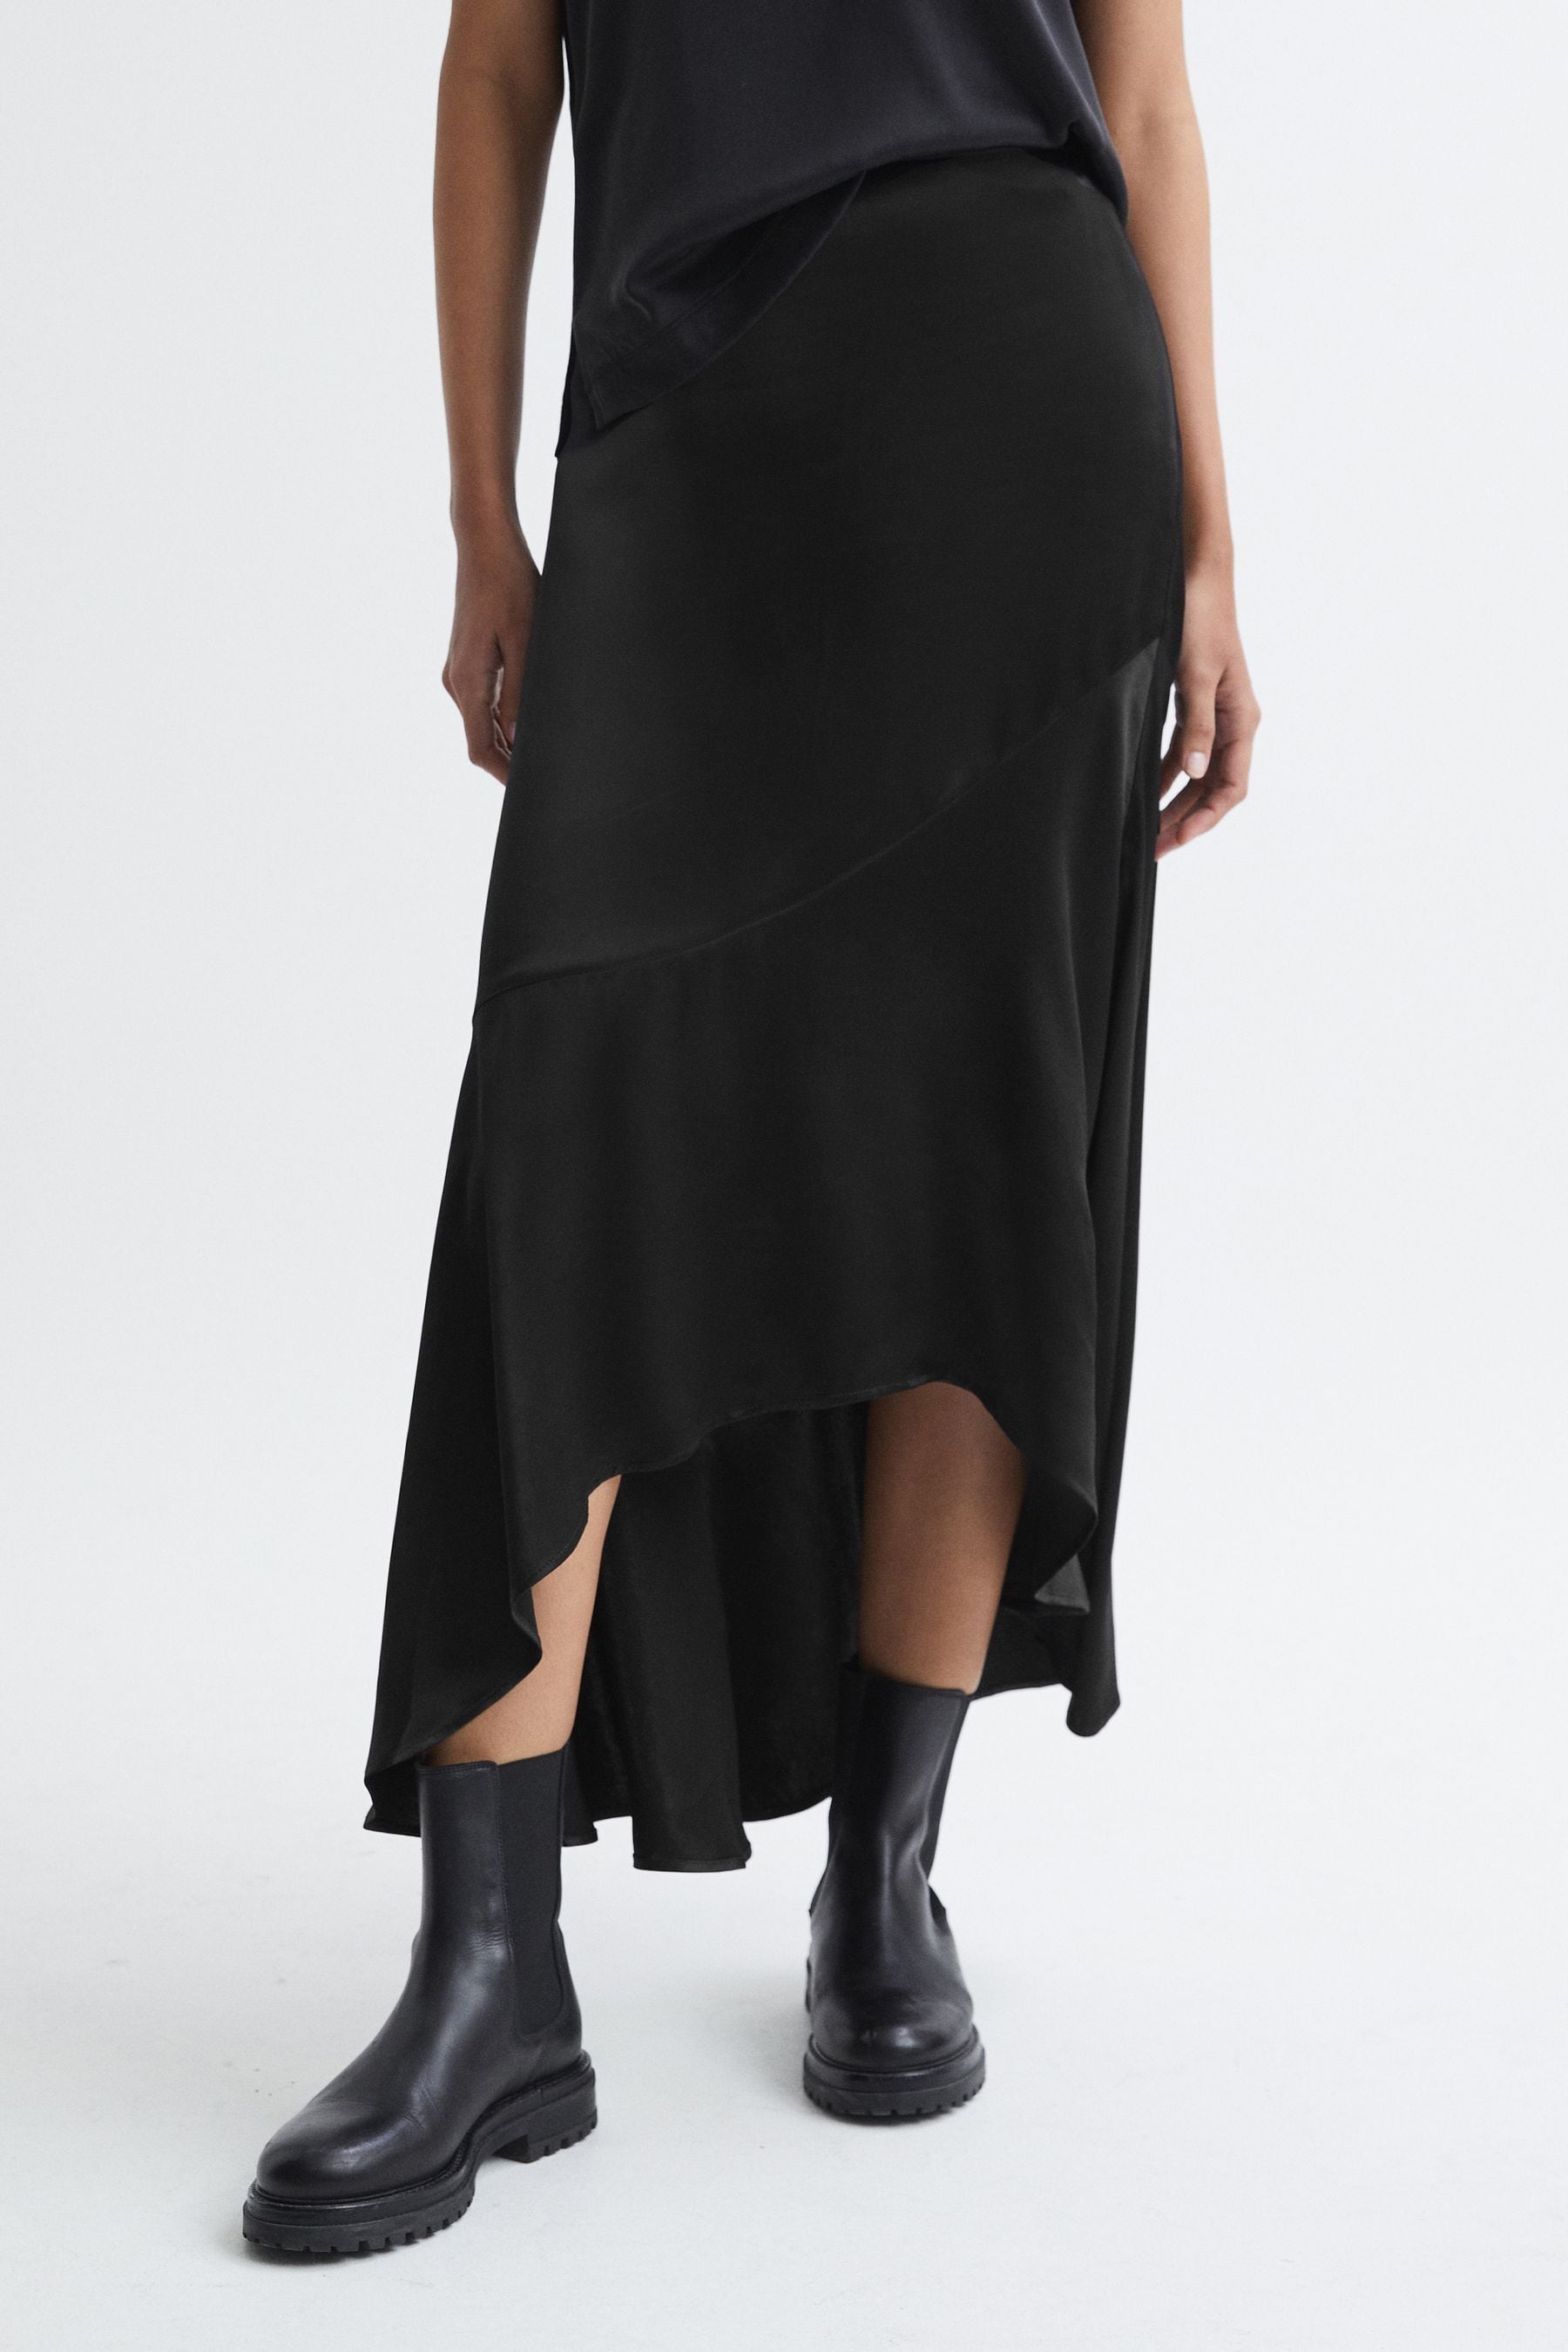 Reiss Inga - Black Satin High Rise Midi Skirt, Us 12